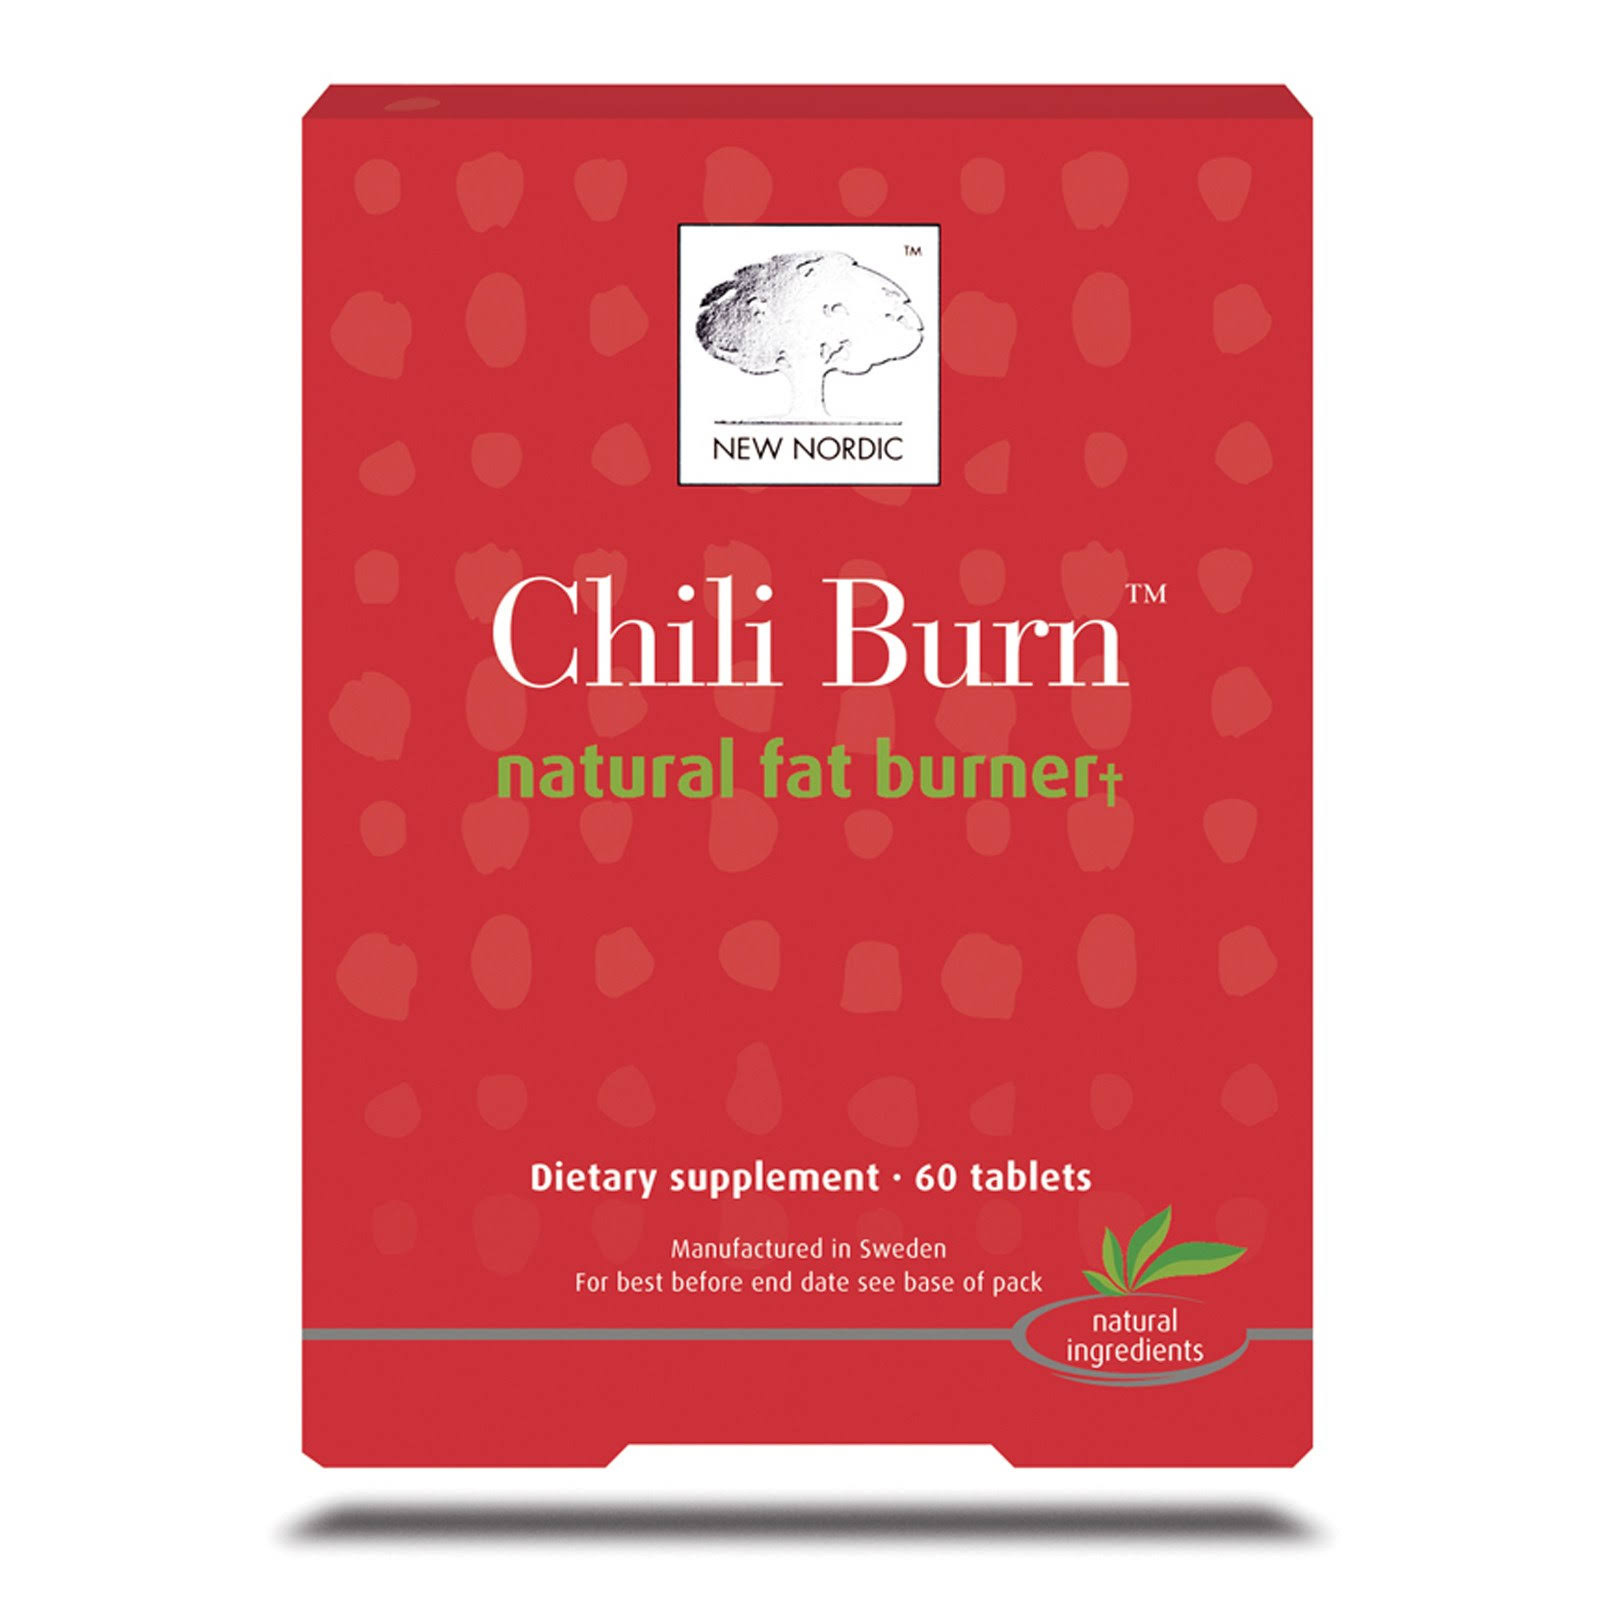 New Nordic Chili Burn Natural Fat Burner - 60 Tablets